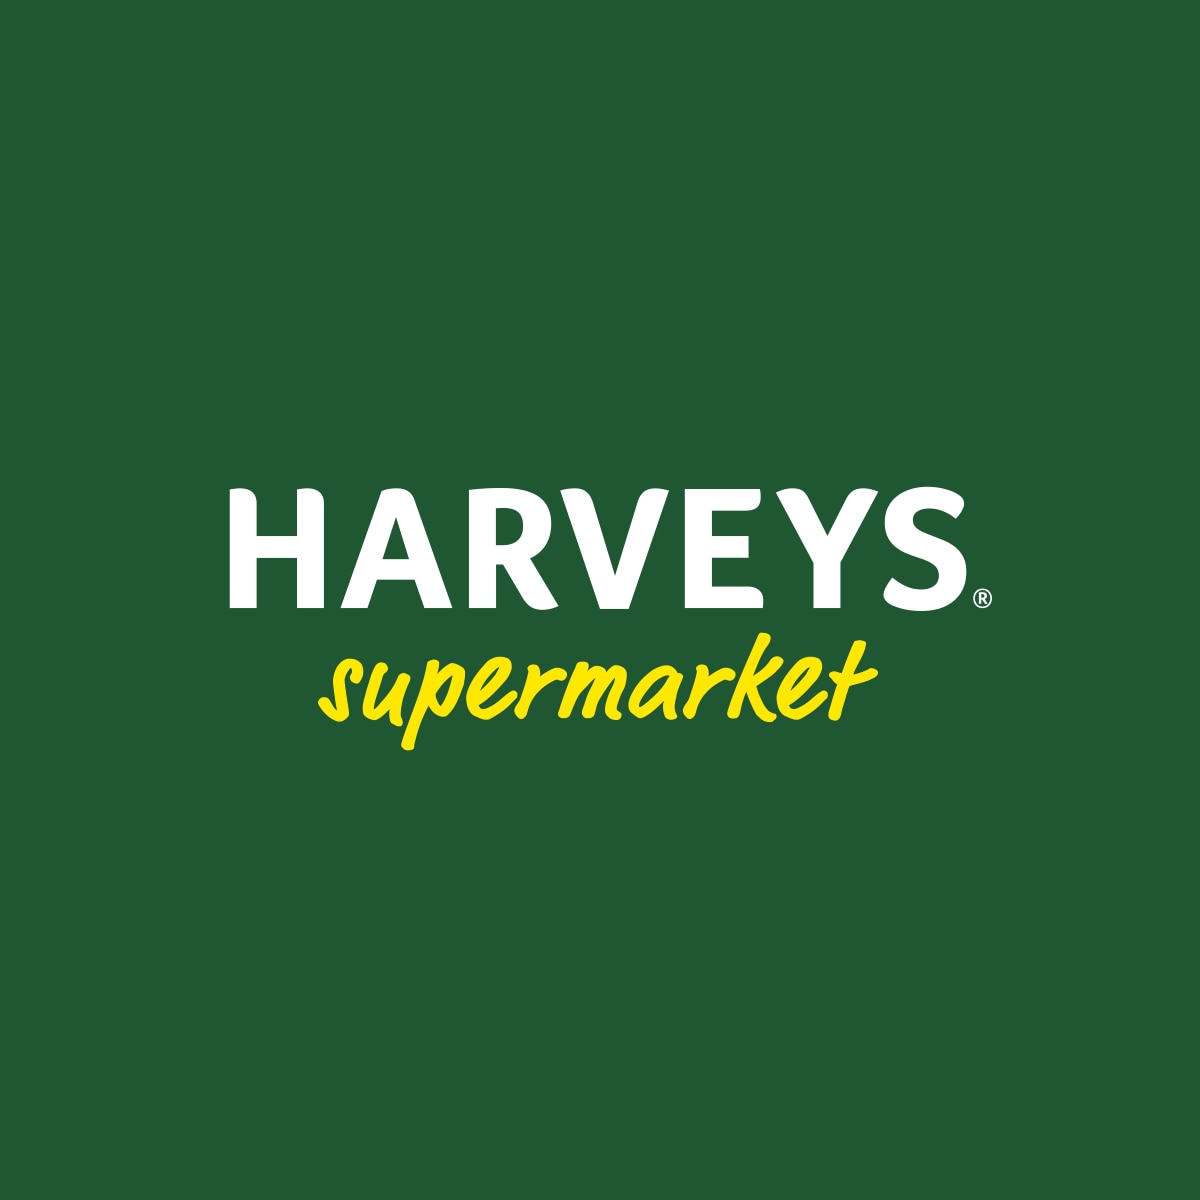 Harveys Supermarket | Serving the Southeast Since 1924